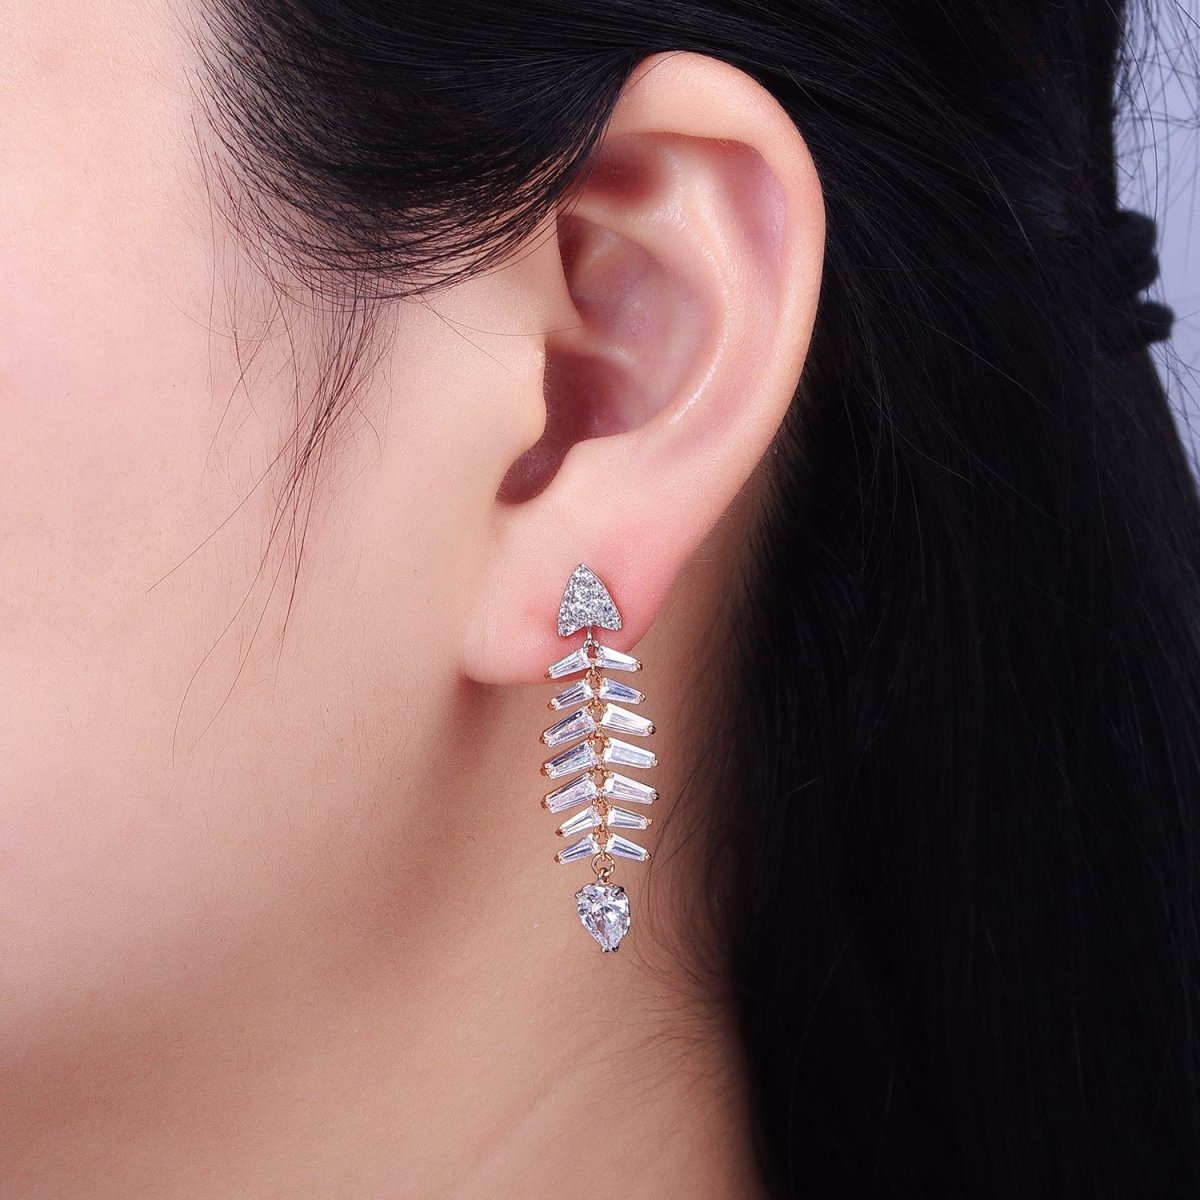 Fishbone Earrings, 18K Gold Filled Fish Bone Earrings, Pirate Fish Earrings CZ Stone AB800 - DLUXCA